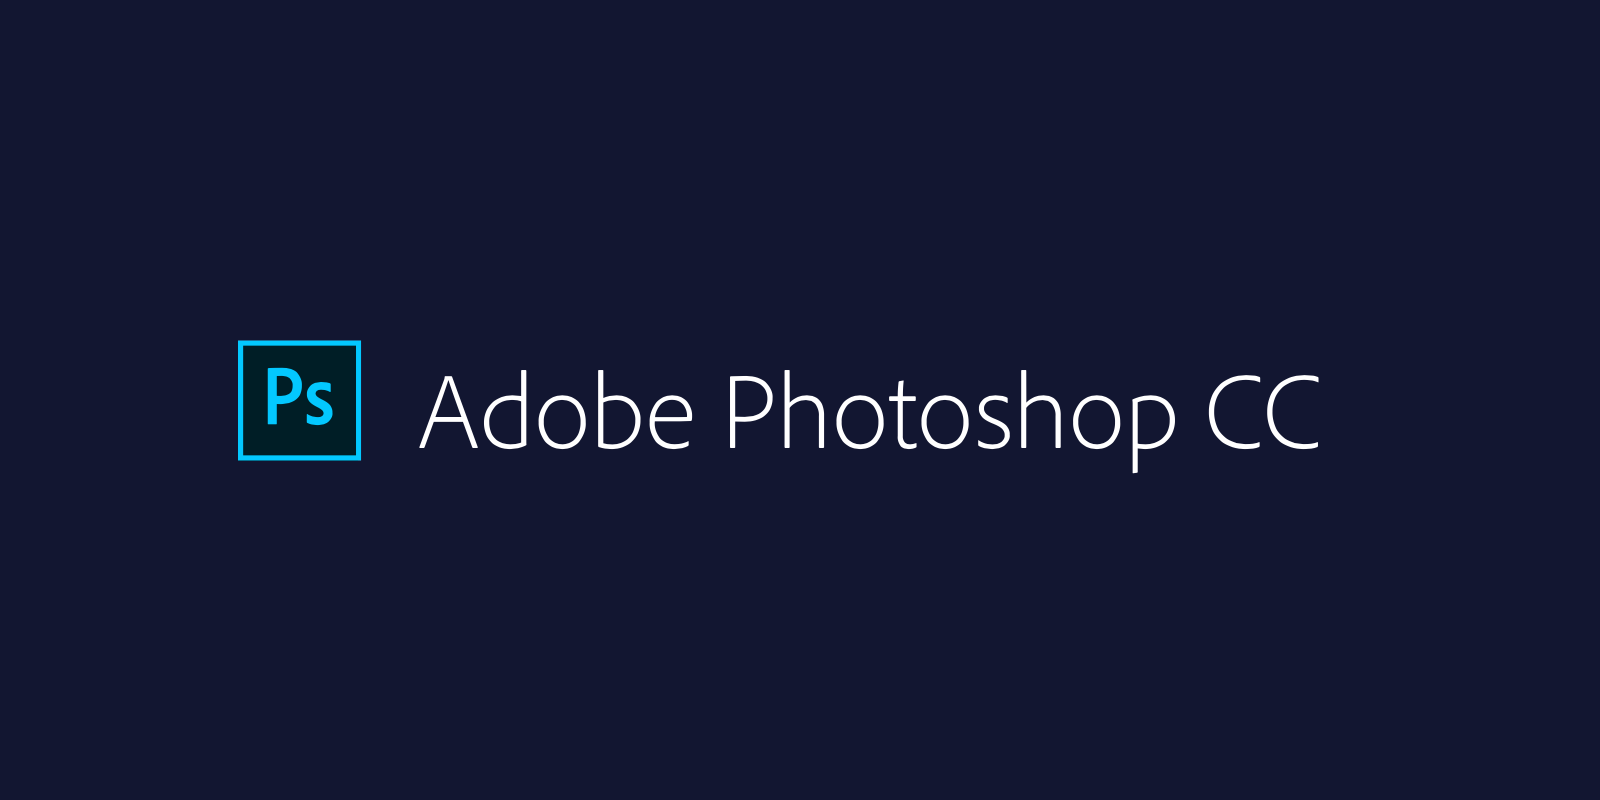 Adobe Photoshop CC 23.4.1.547 Crack + License